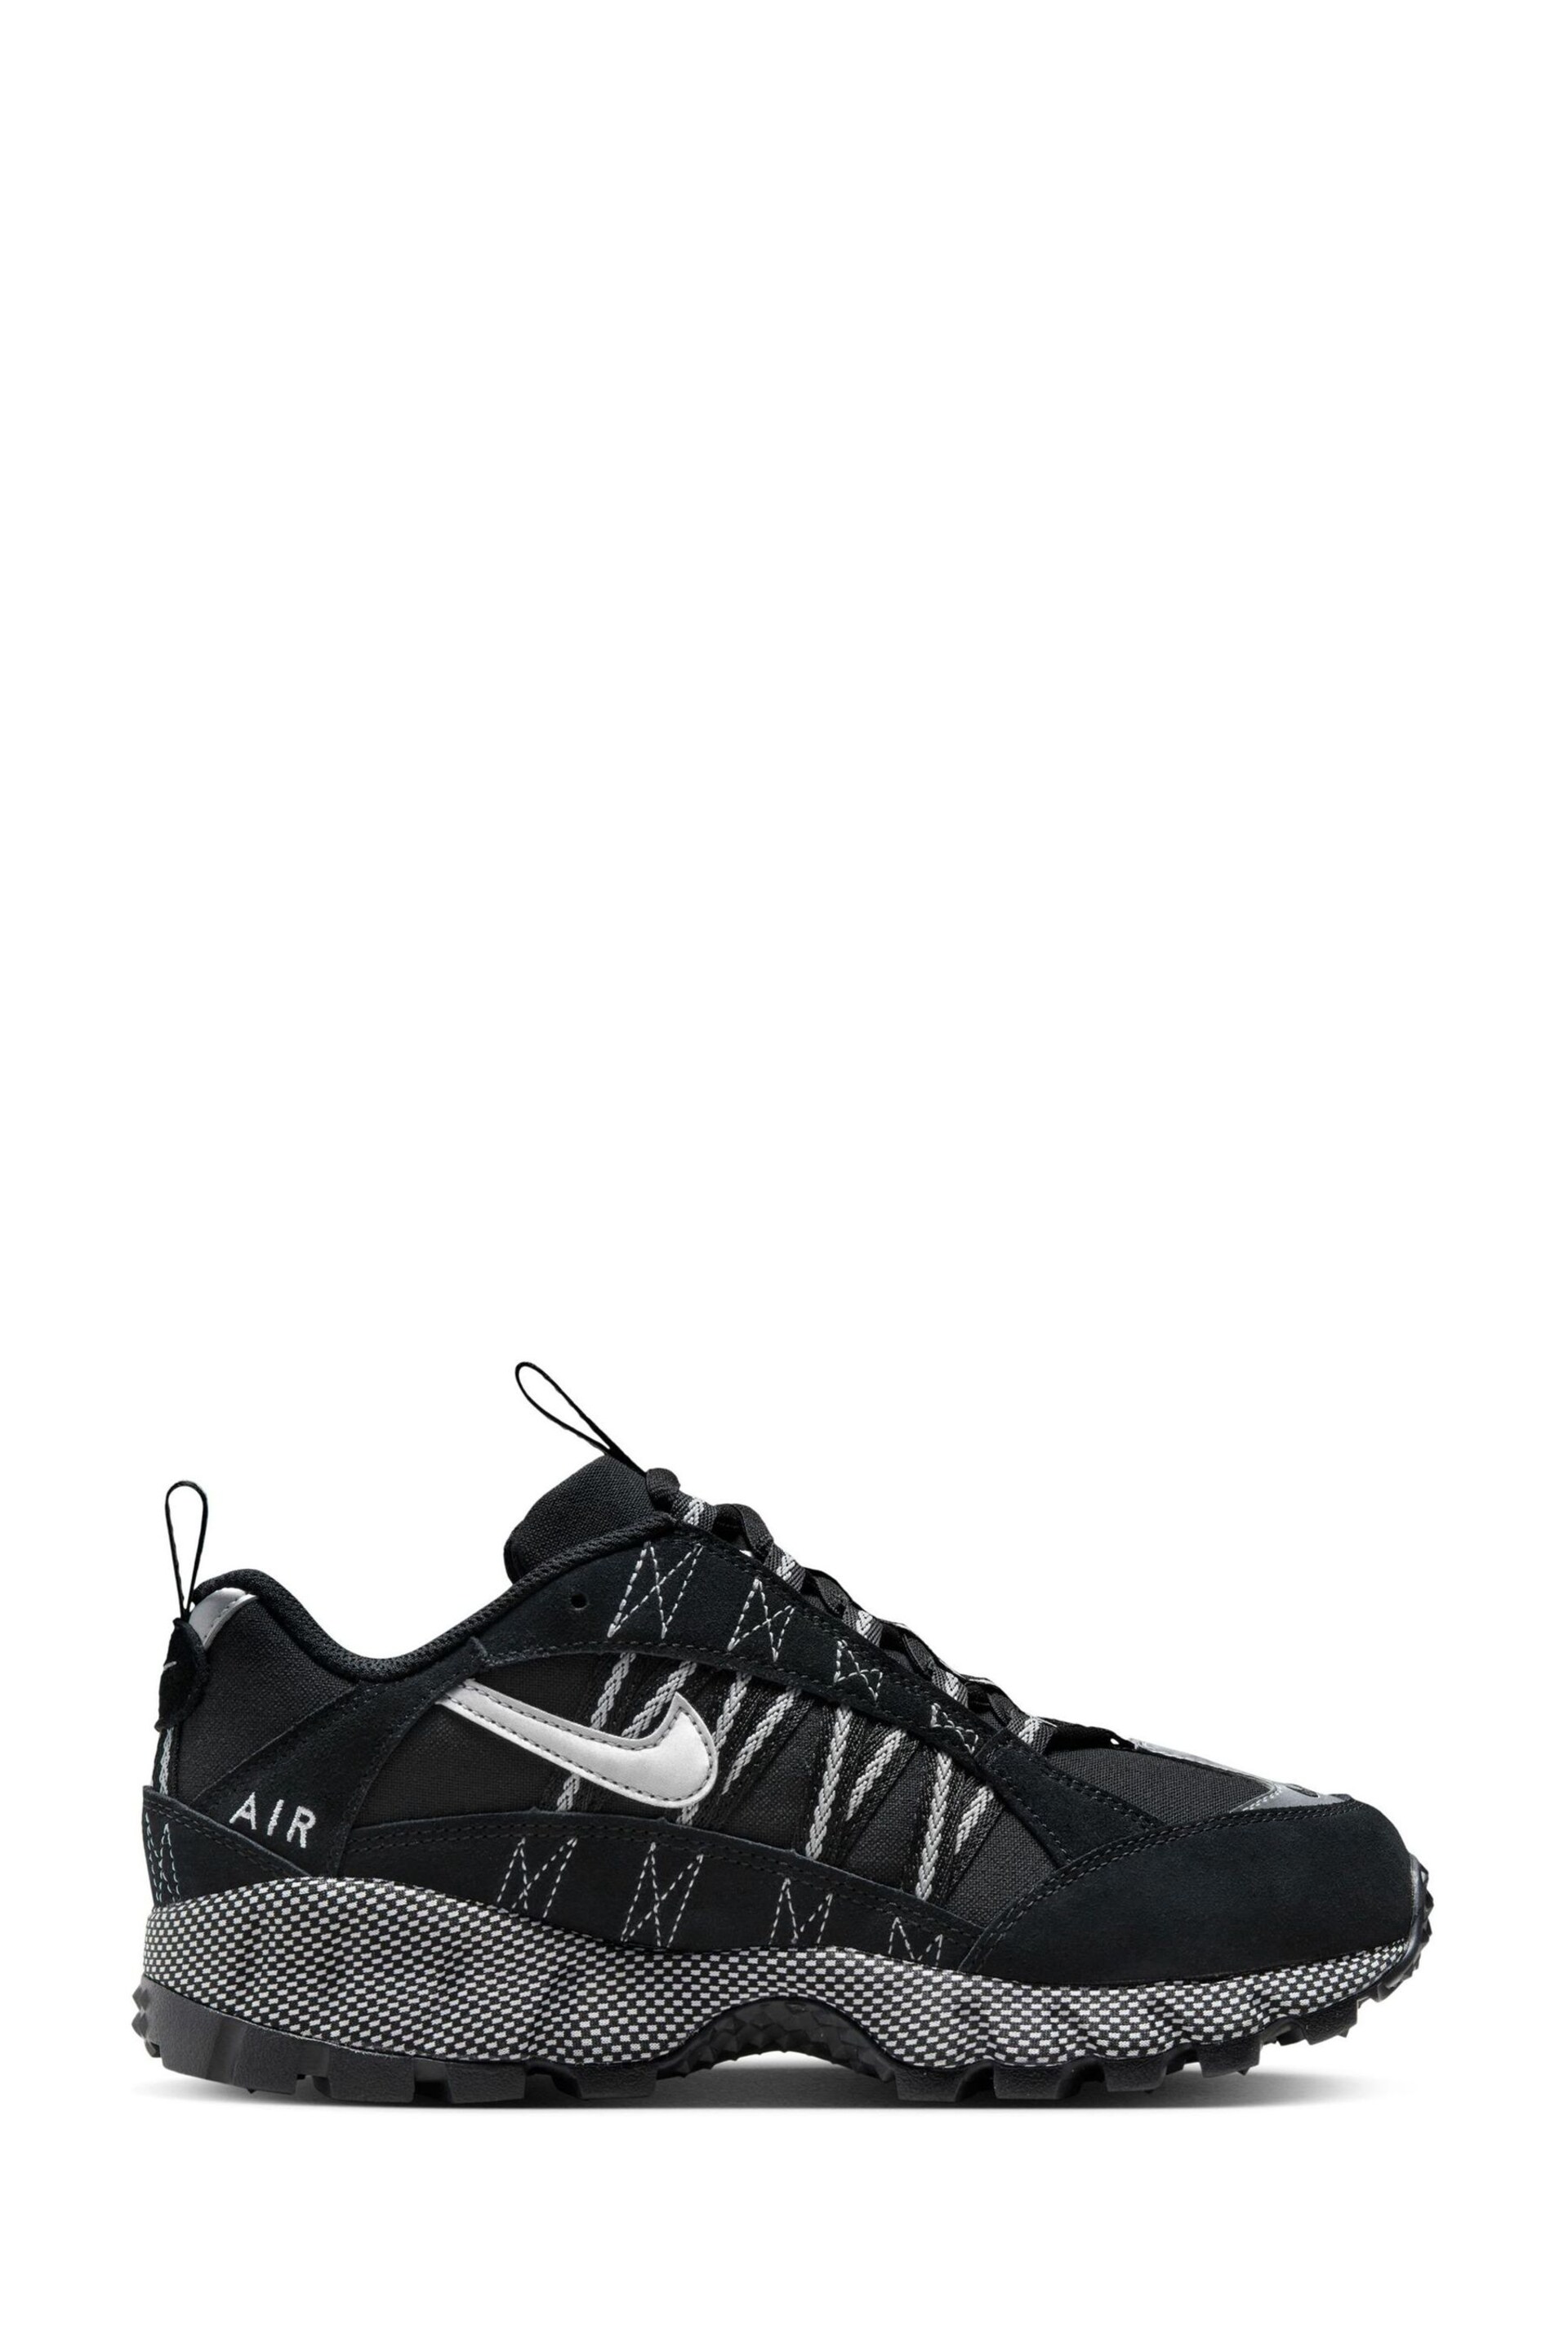 Nike Black Air Humara Trainer Boots - Image 1 of 9